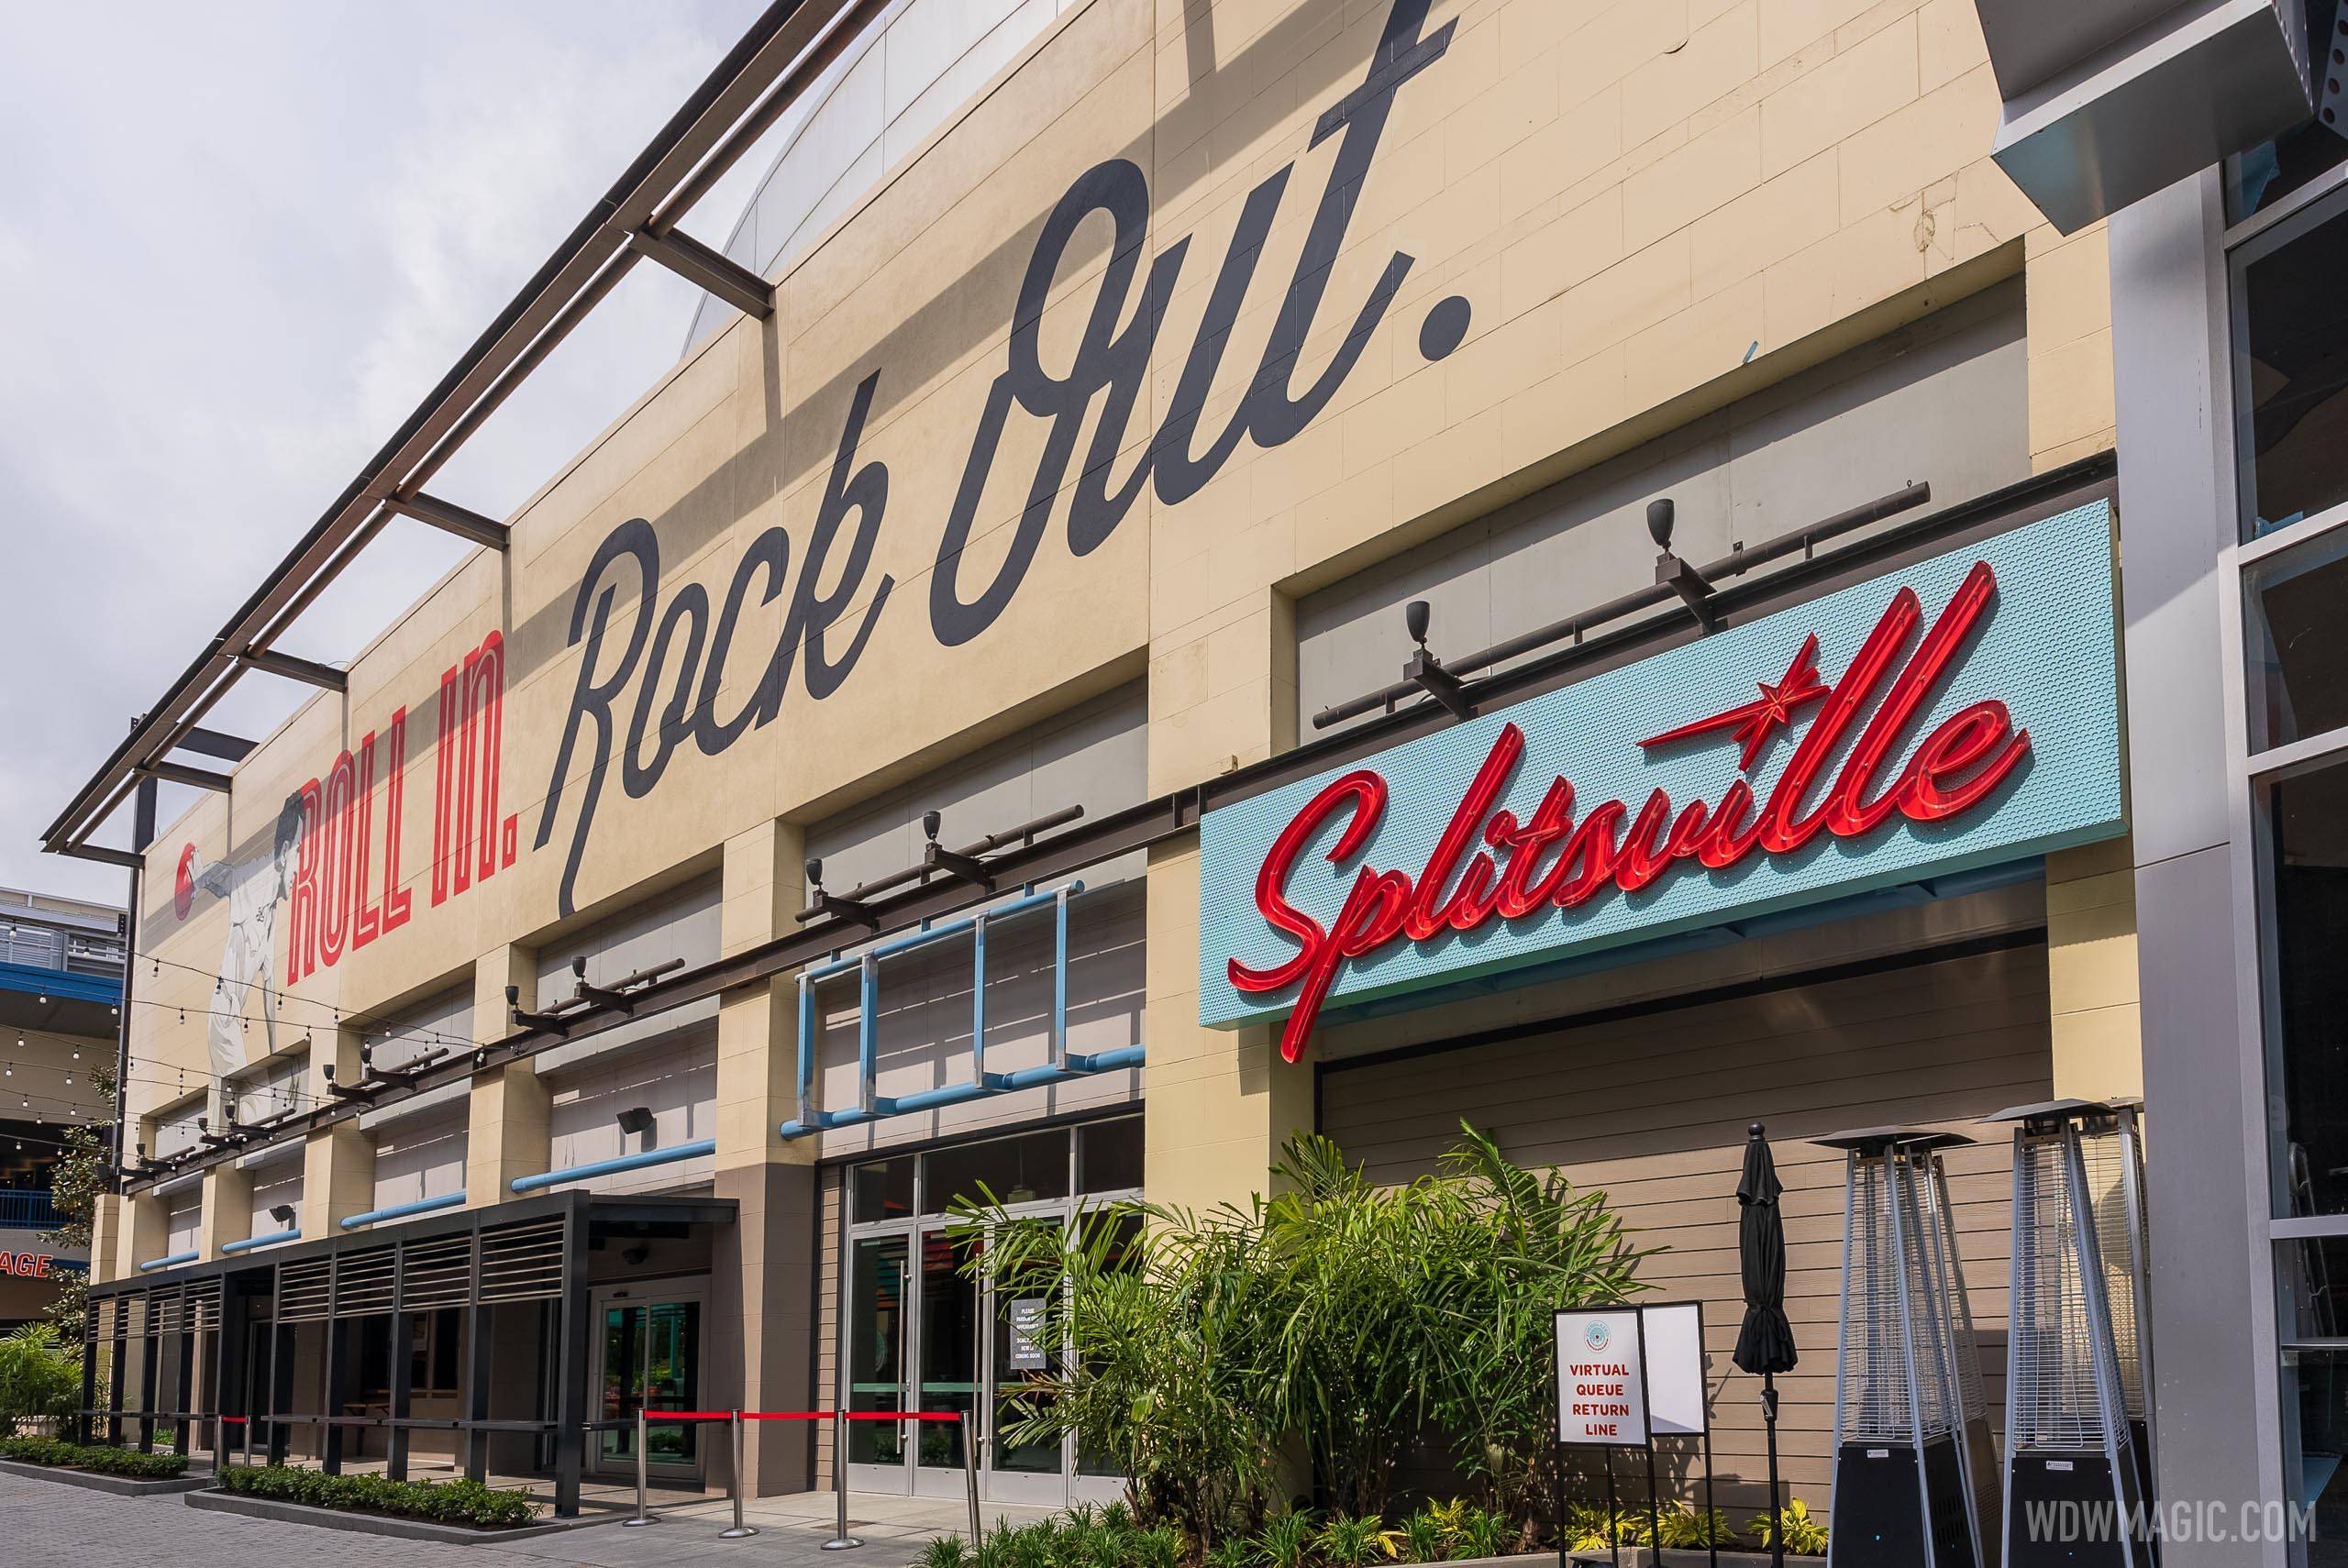 Splitsville to Reopen at Disney Springs on July 10